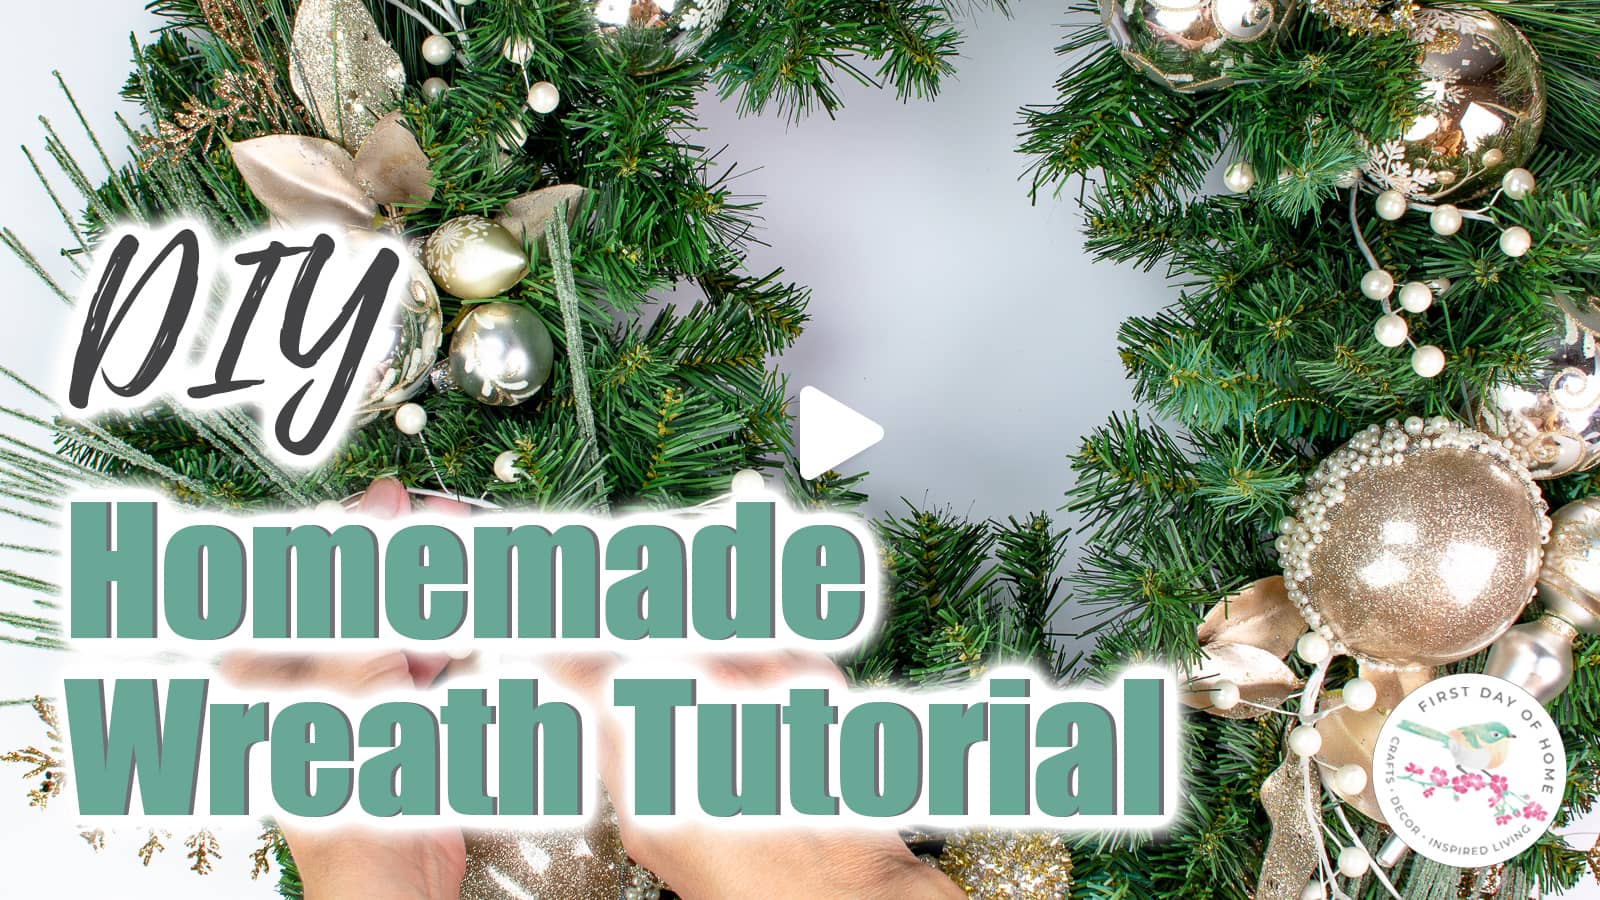 Homemade Christmas Wreath tutorial thumbnail showing hands making Christmas wreath.